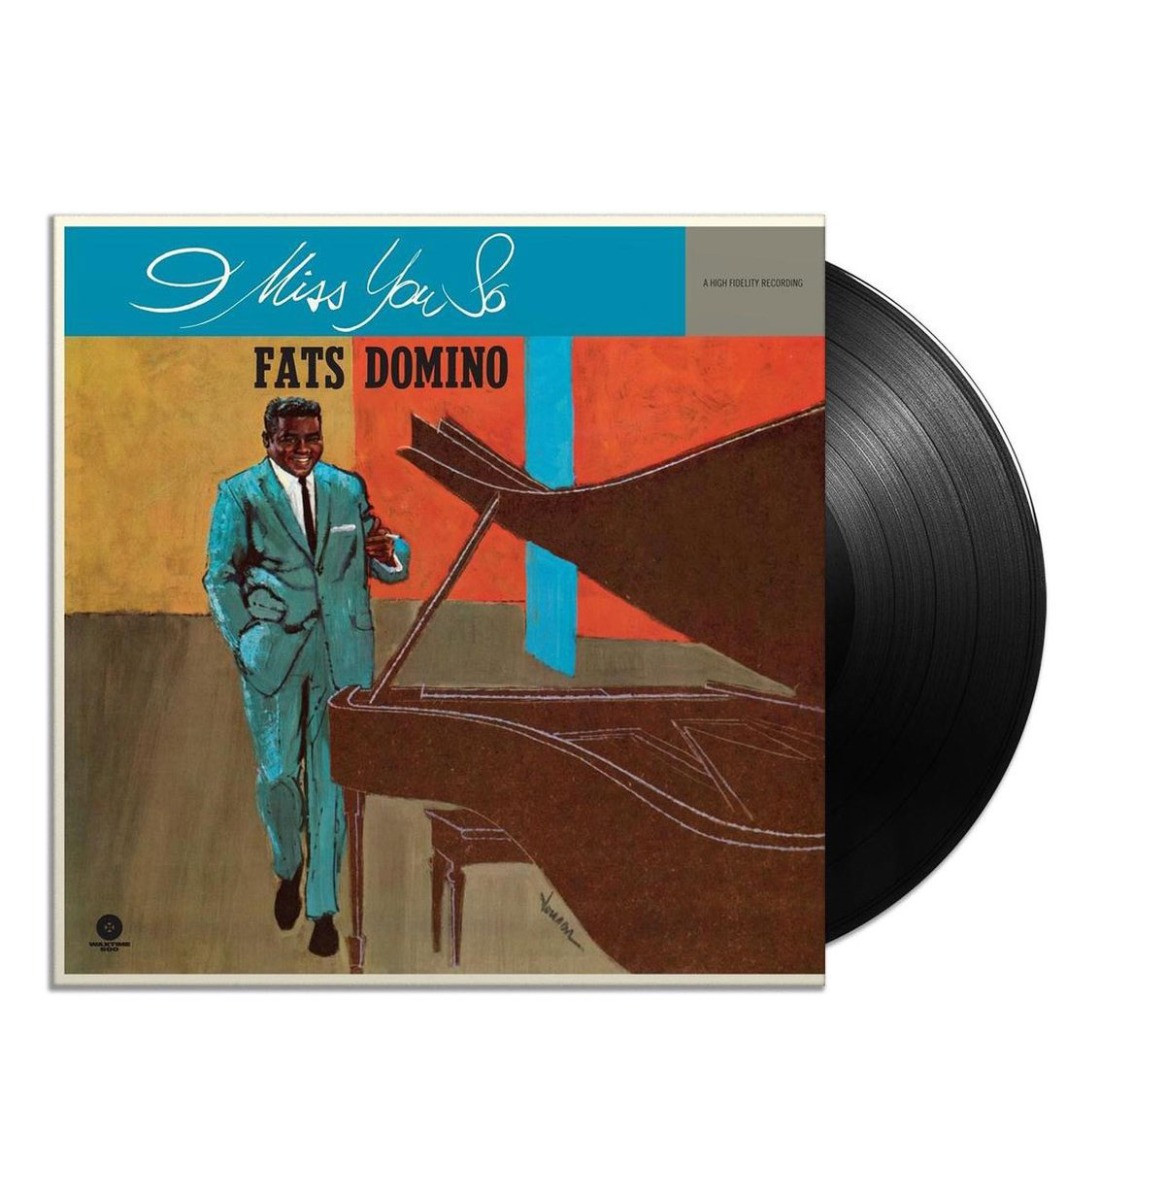 Fats Domino - I Miss You So LP